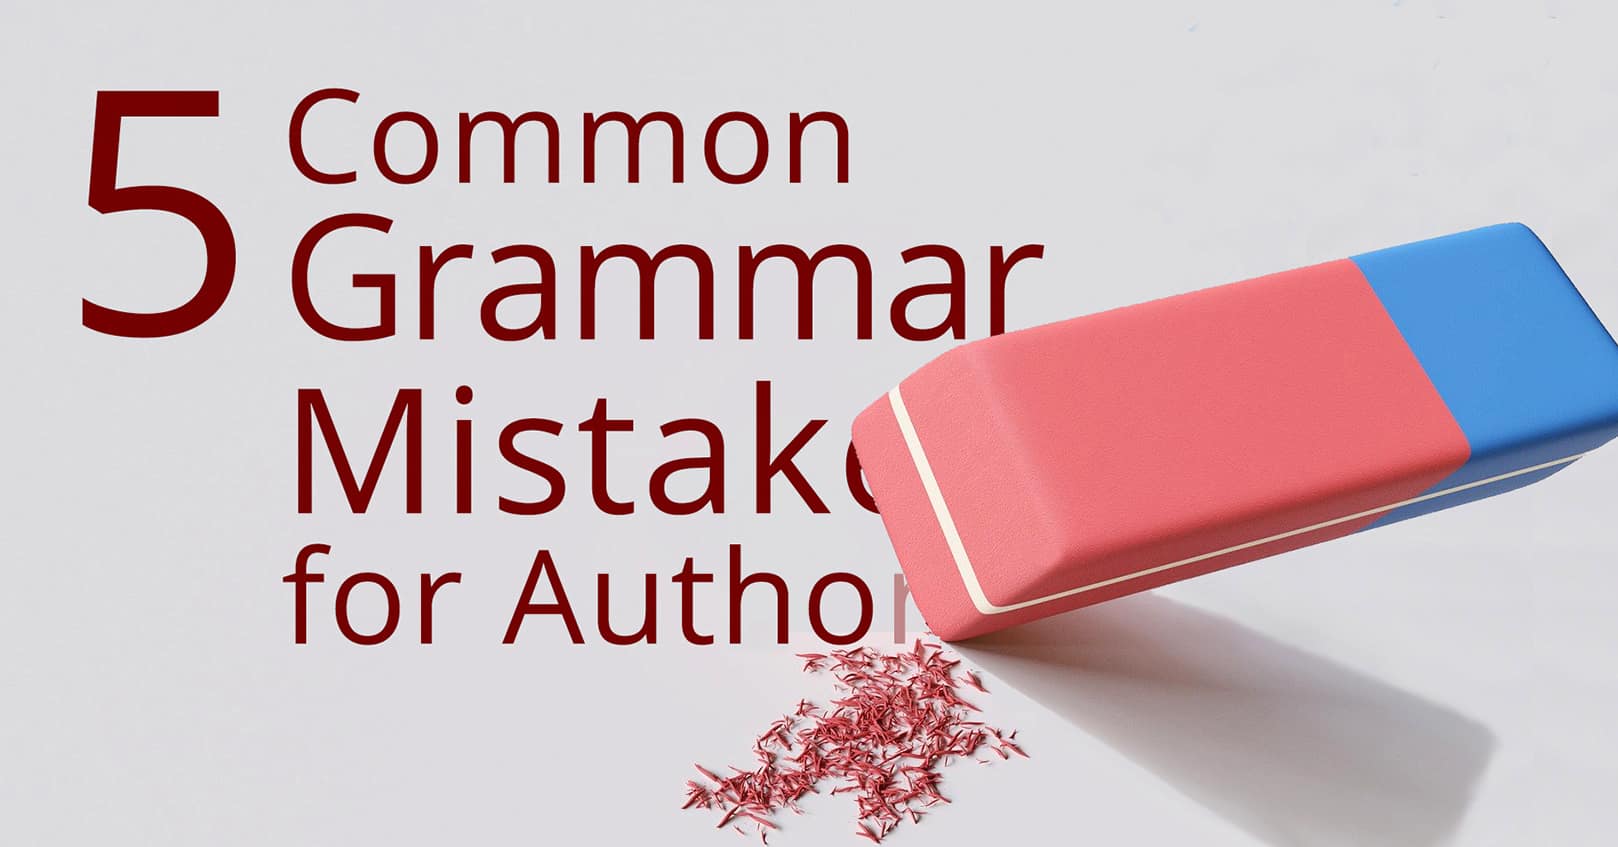 5 common grammar mistakes